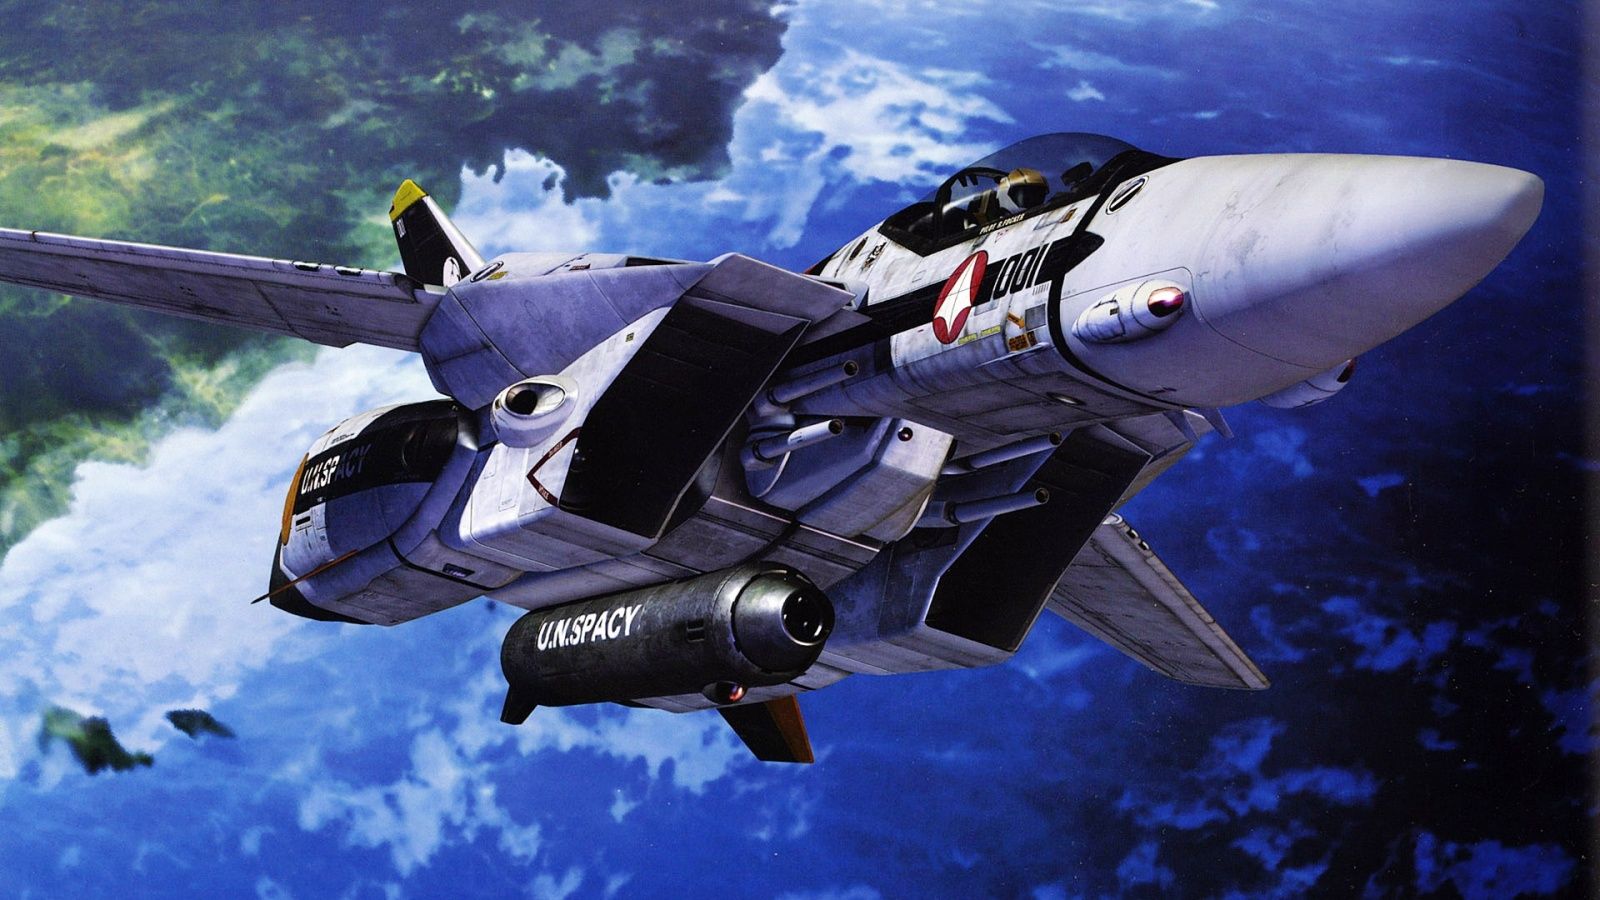 Jet Fighter Wallpaper in jpg format for free download